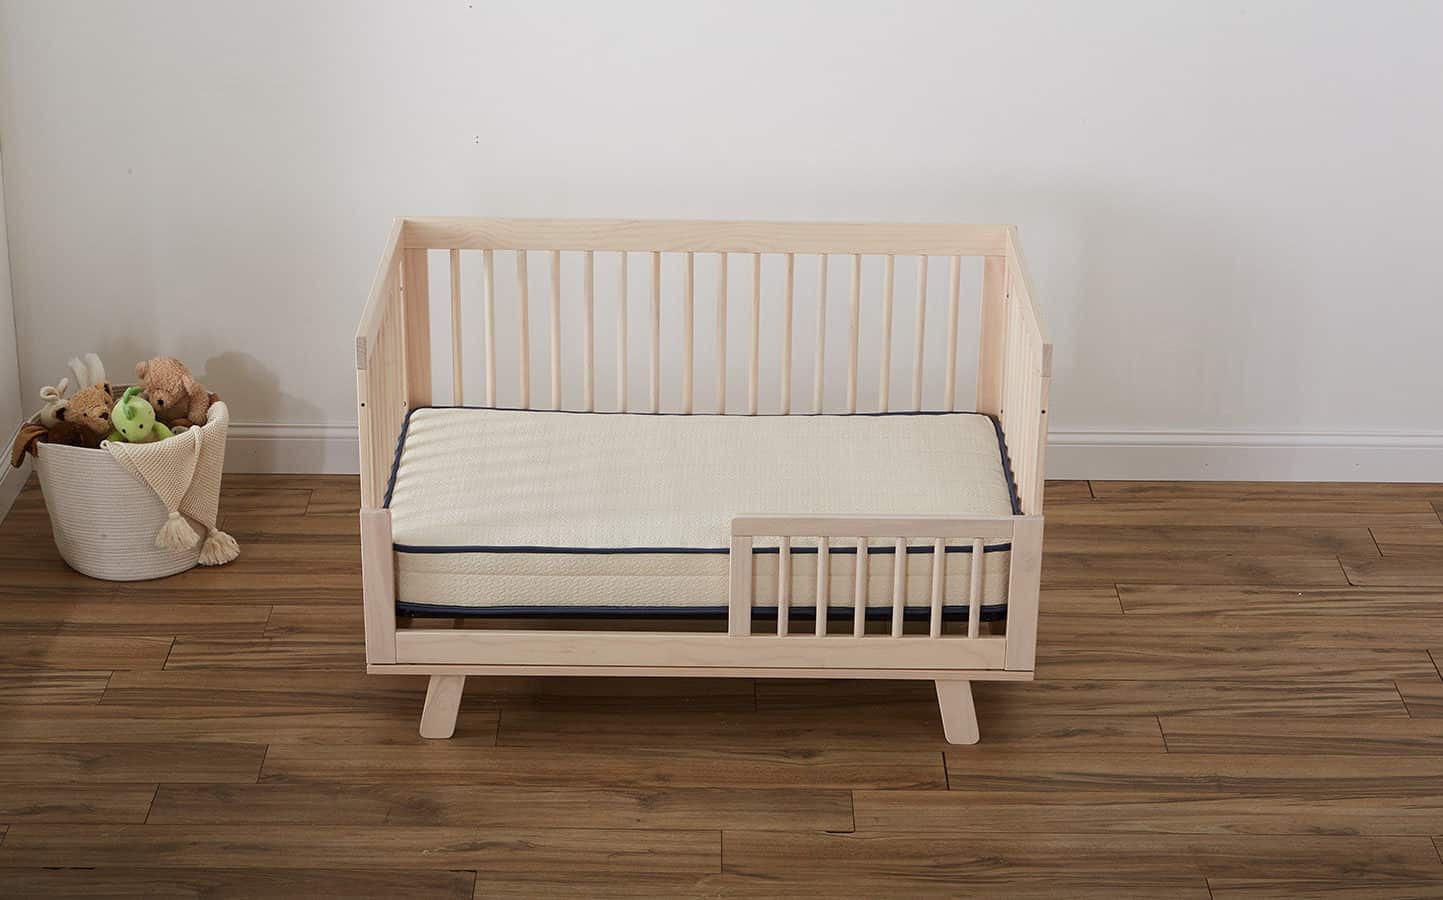 Emily organic crib mattress on wooden crib